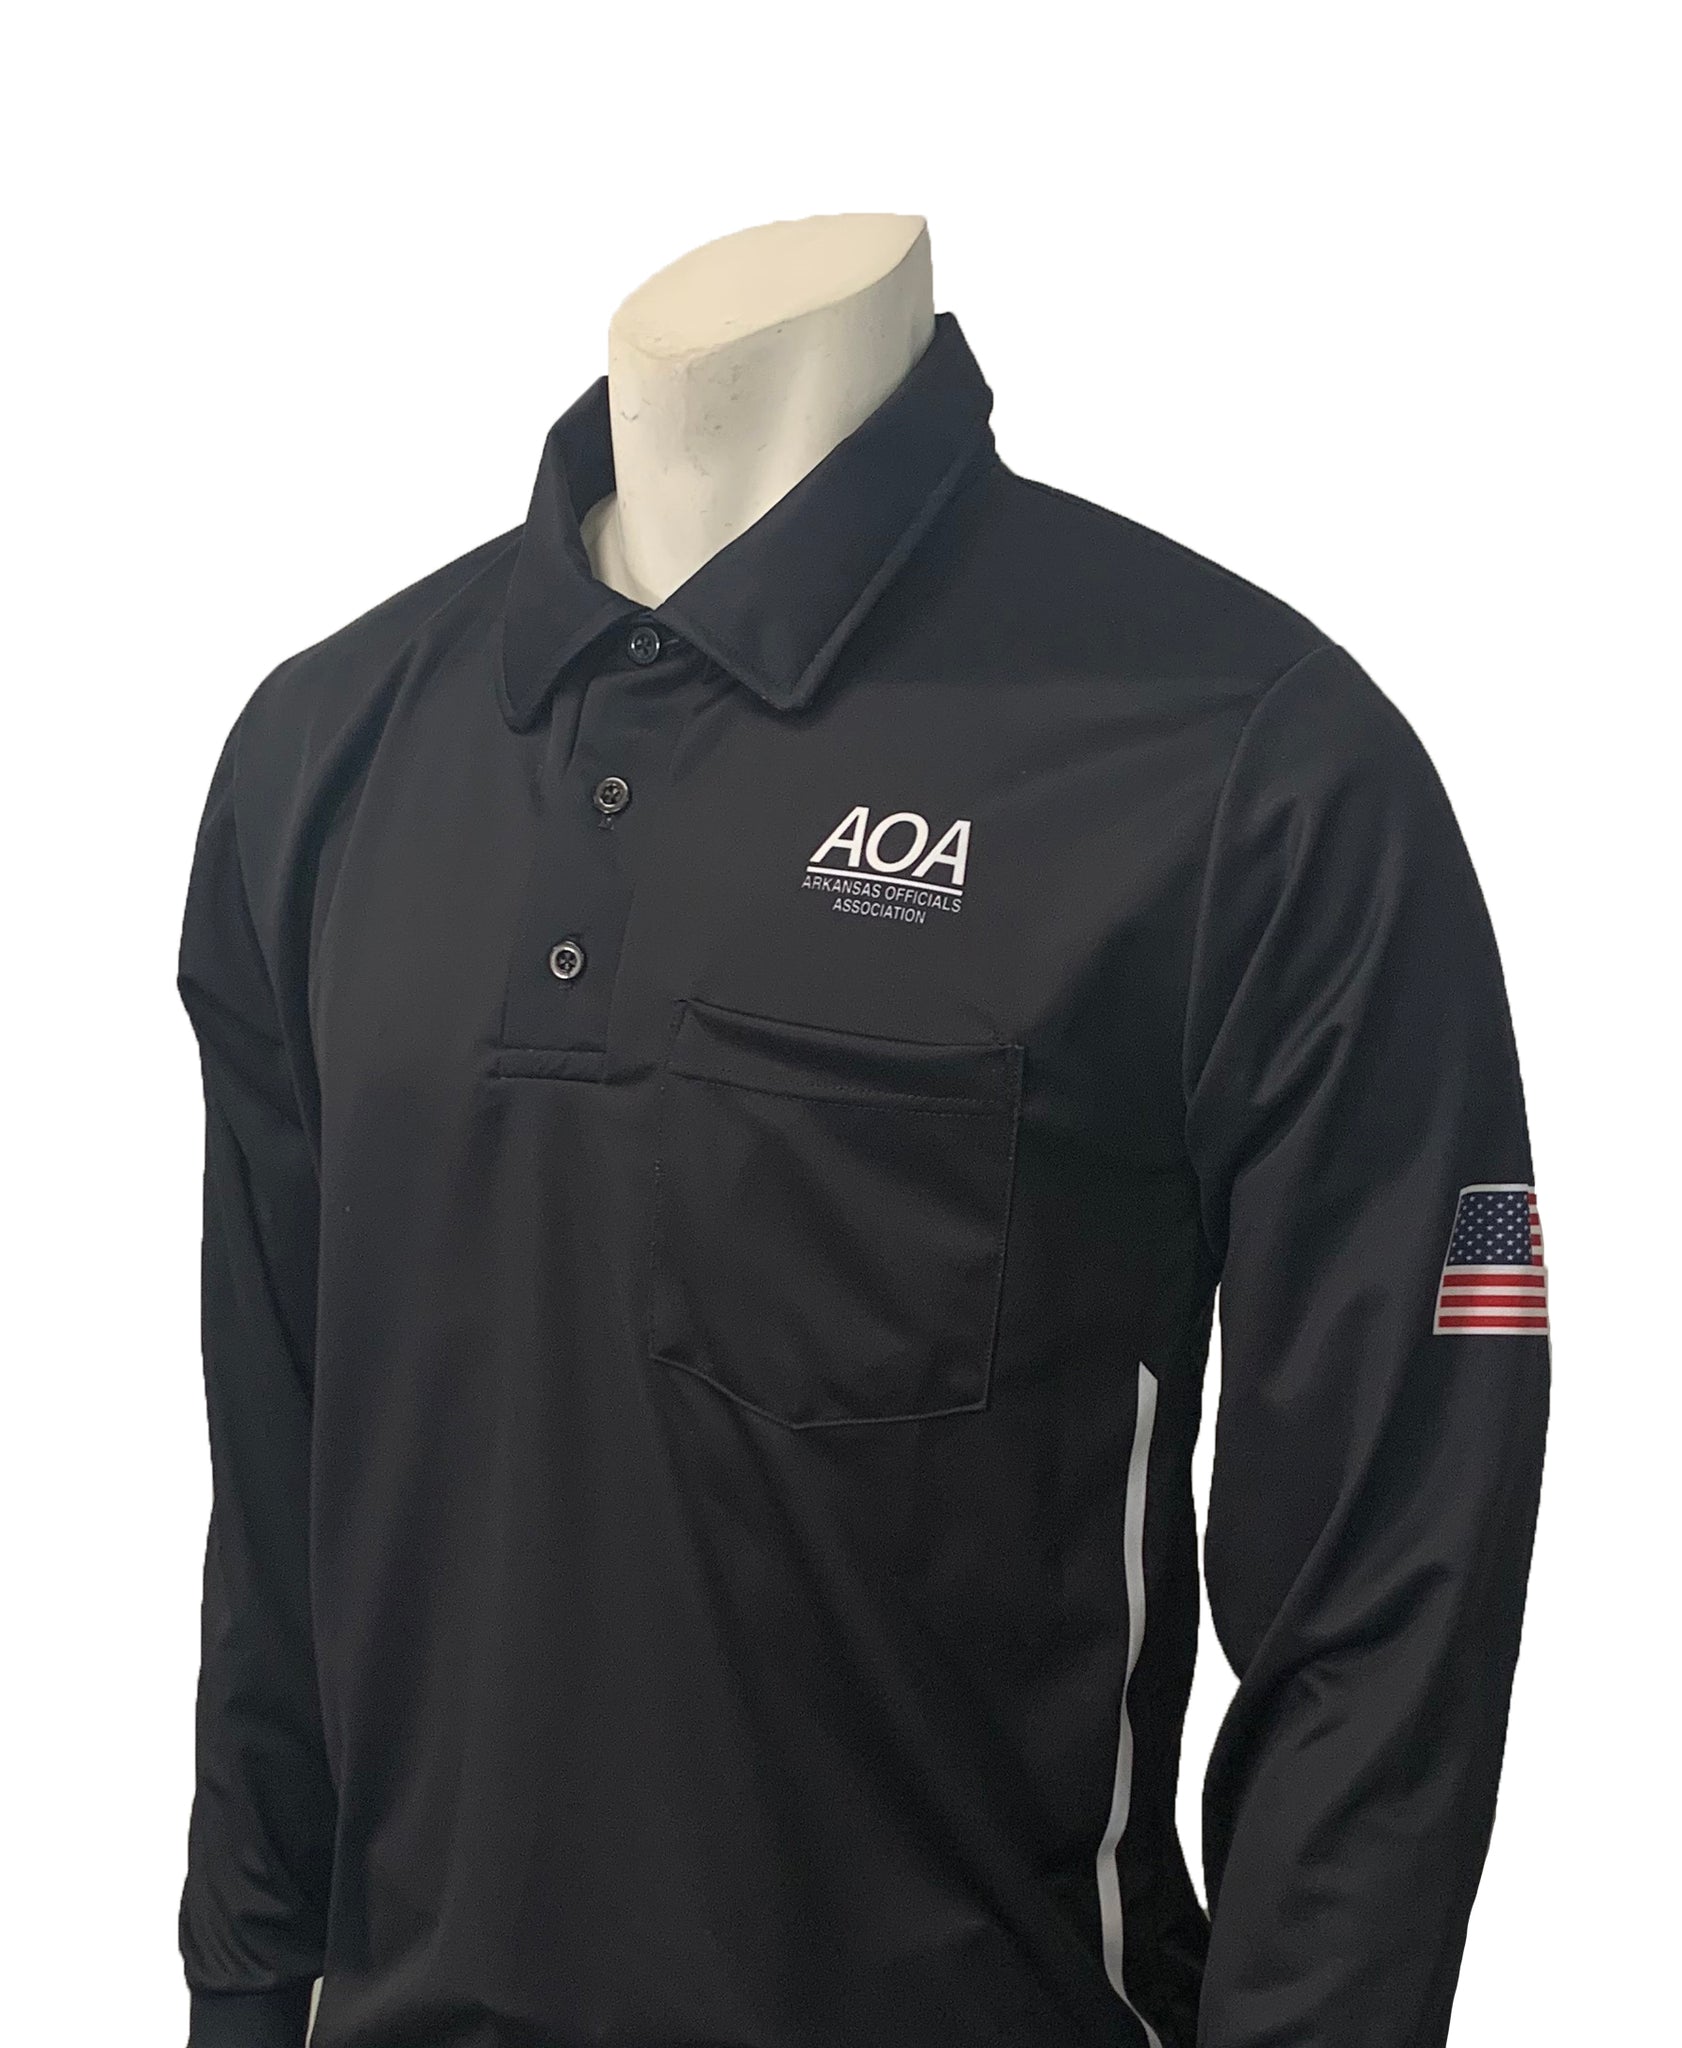 USA311AR-BK - Smitty "Made in USA" - "AOA" Long Sleeve Black Umpire Shirt